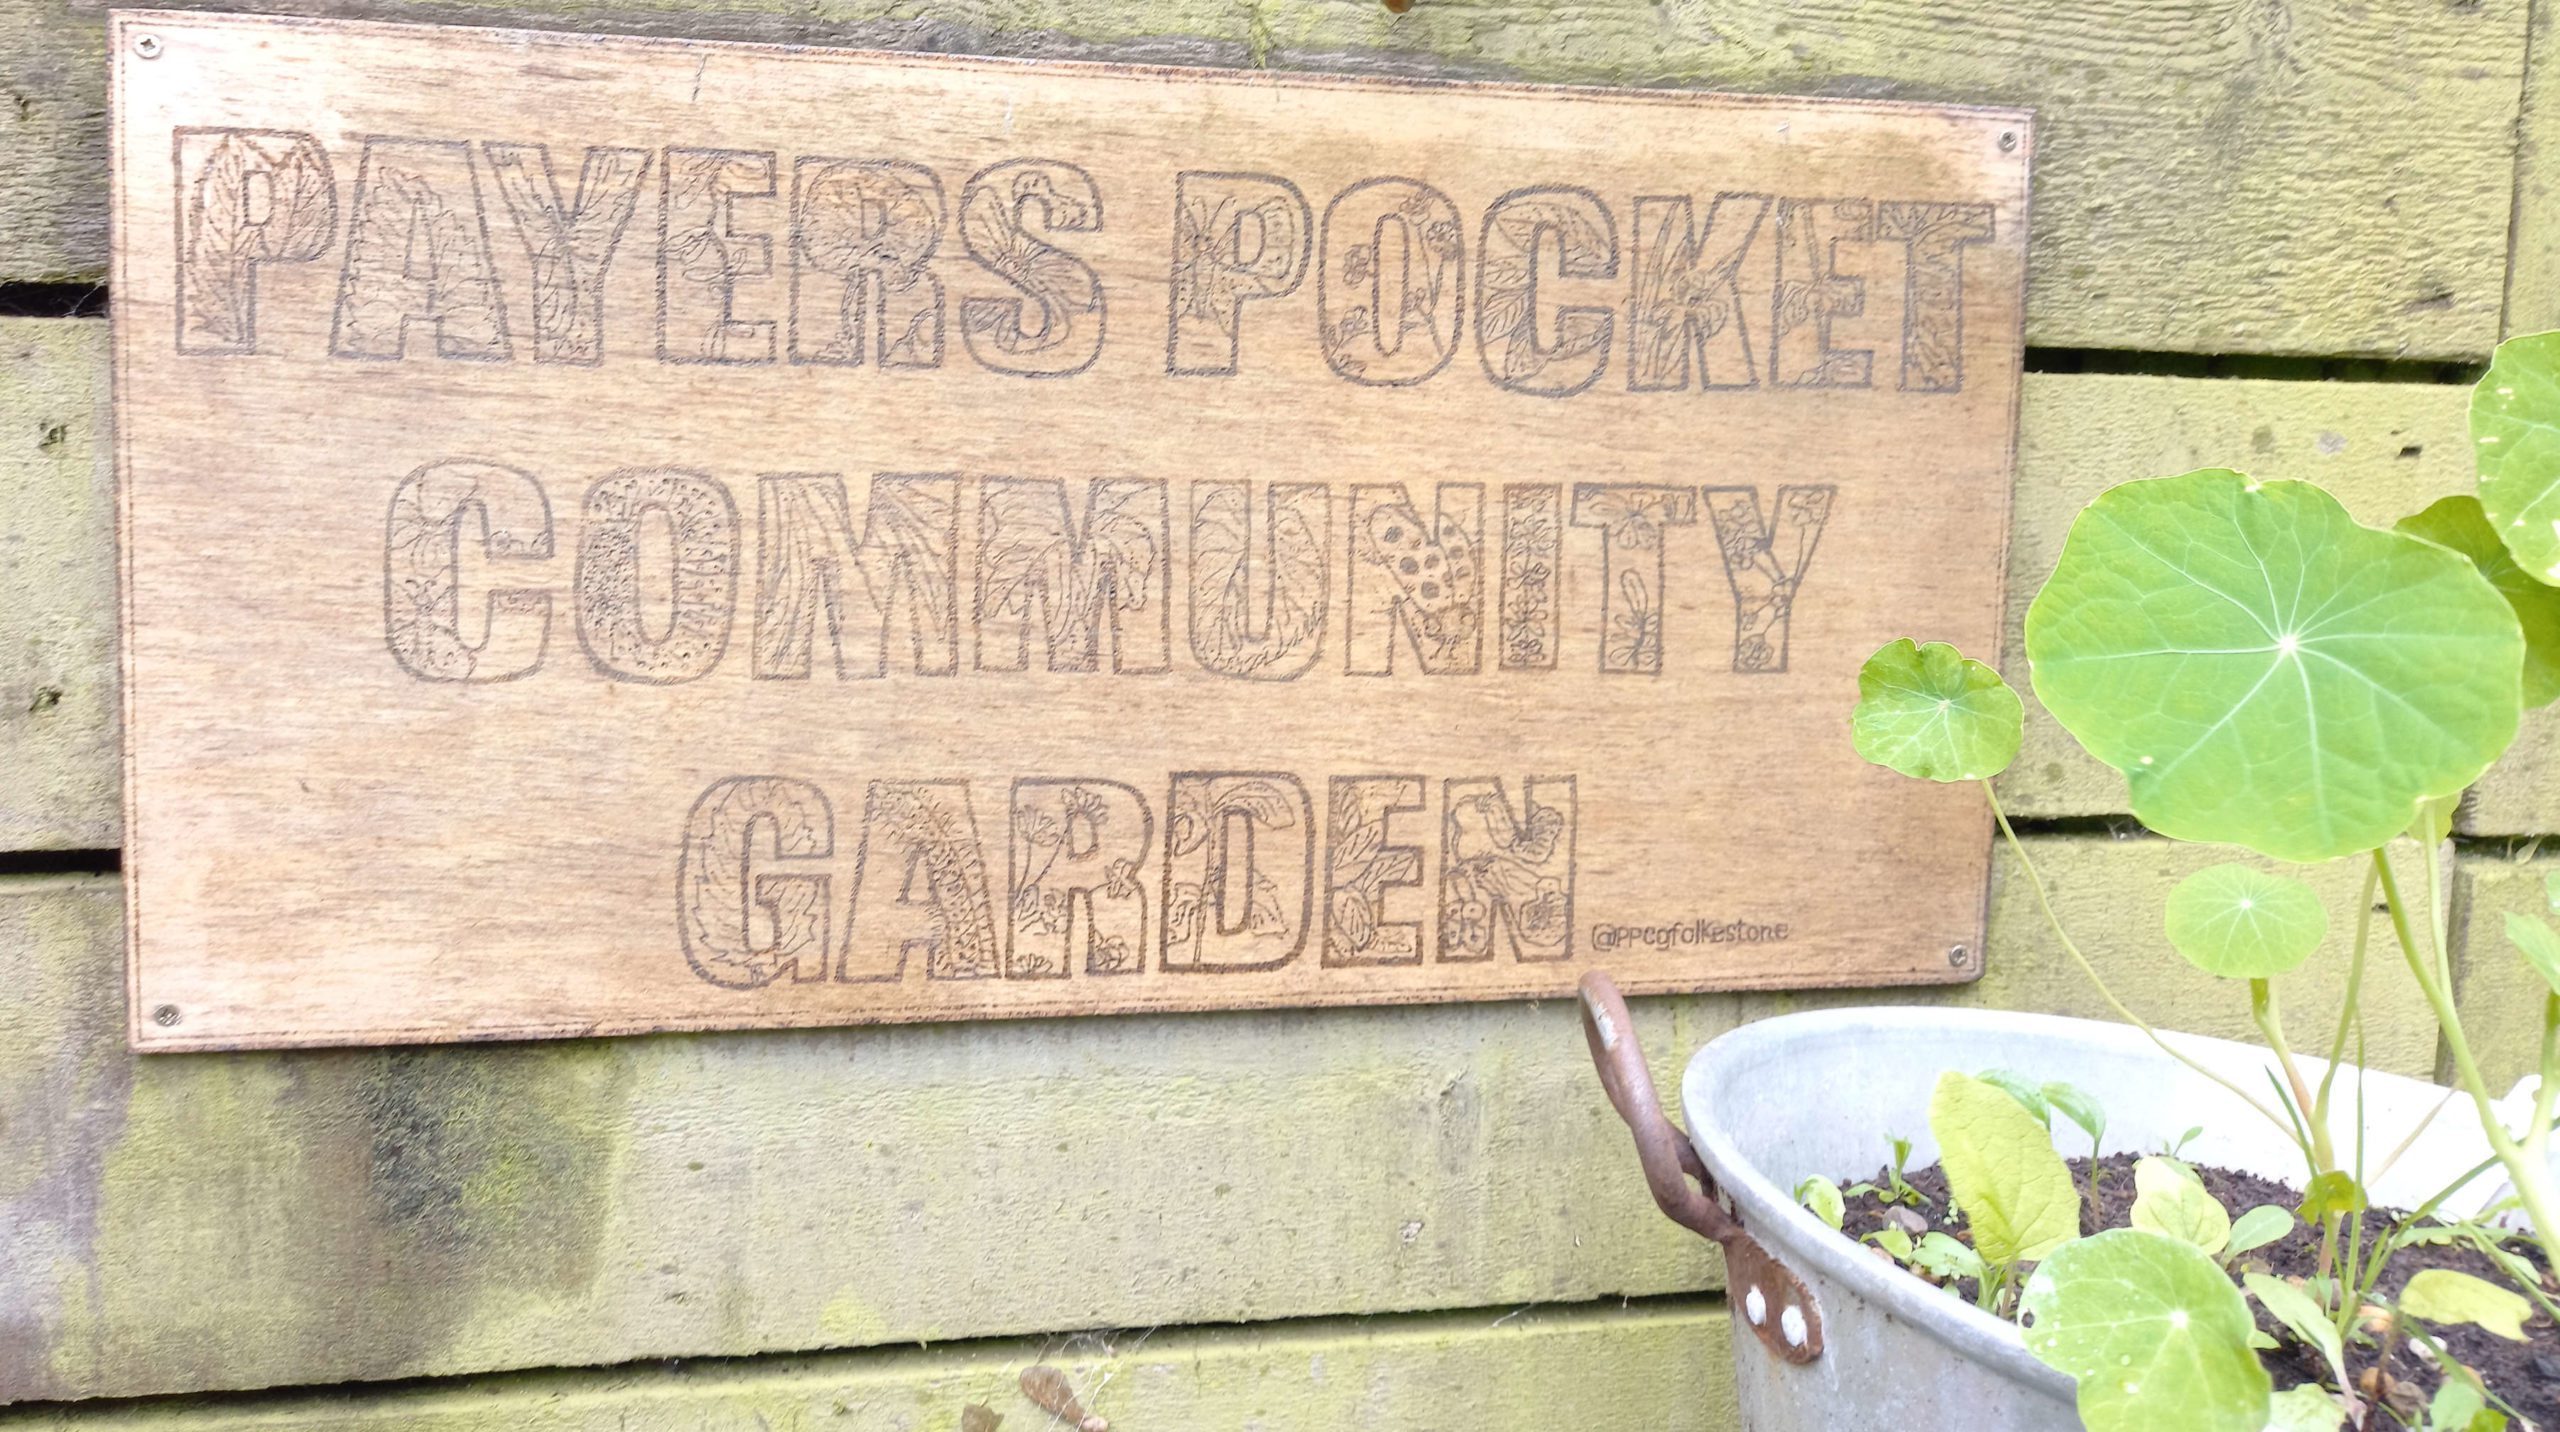 Payers Pocket Community Garden